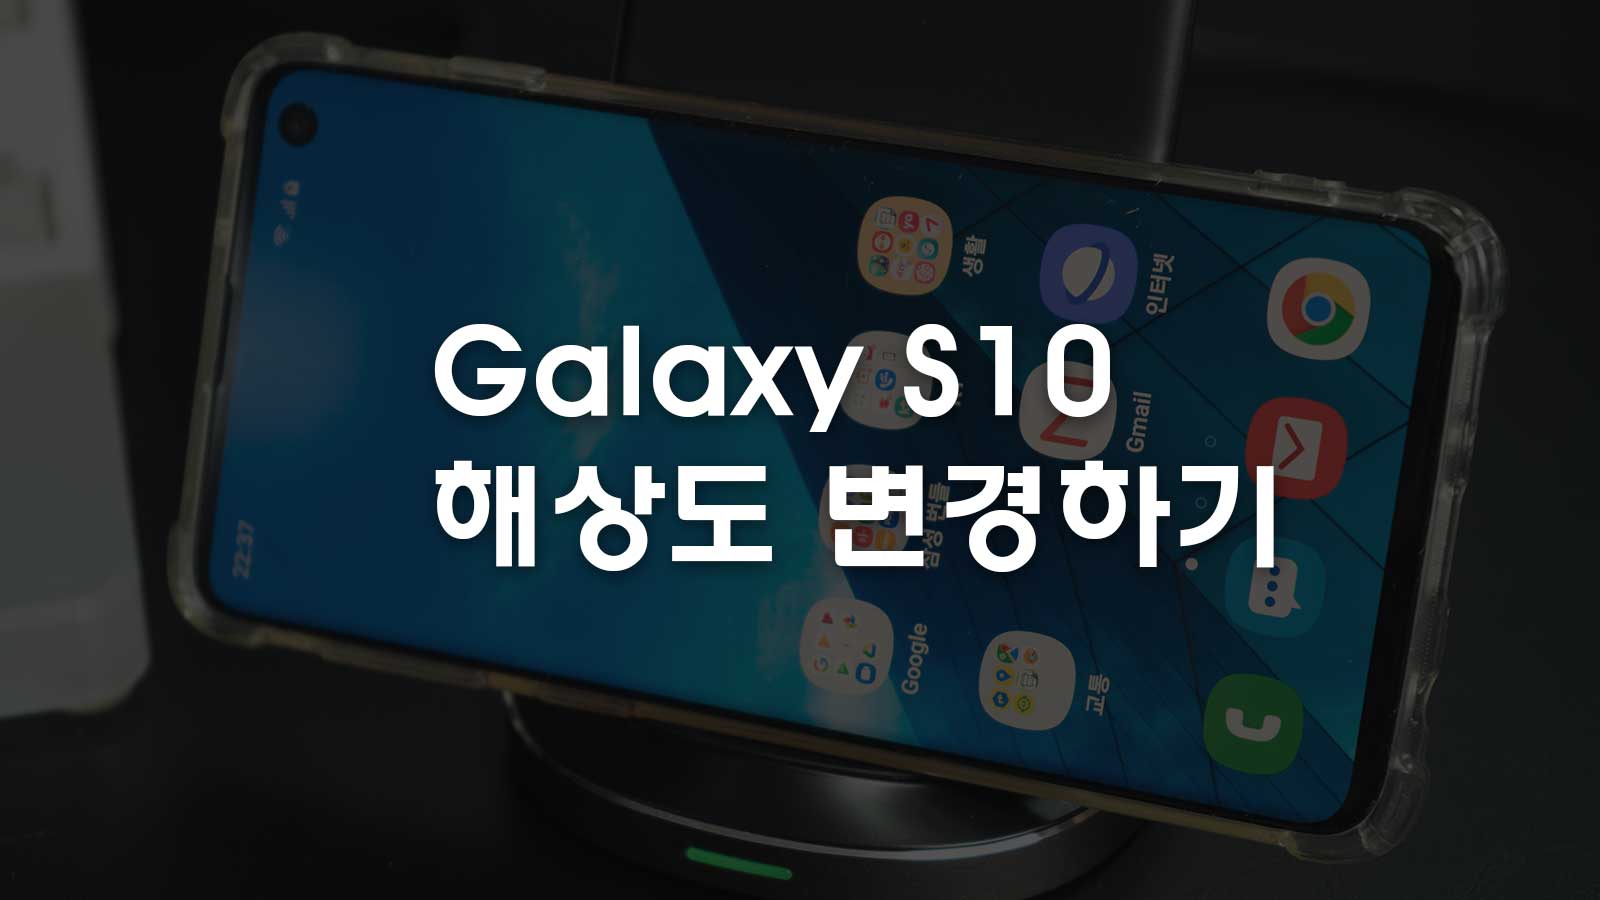 Galaxy S10 Change Display Resolution Title